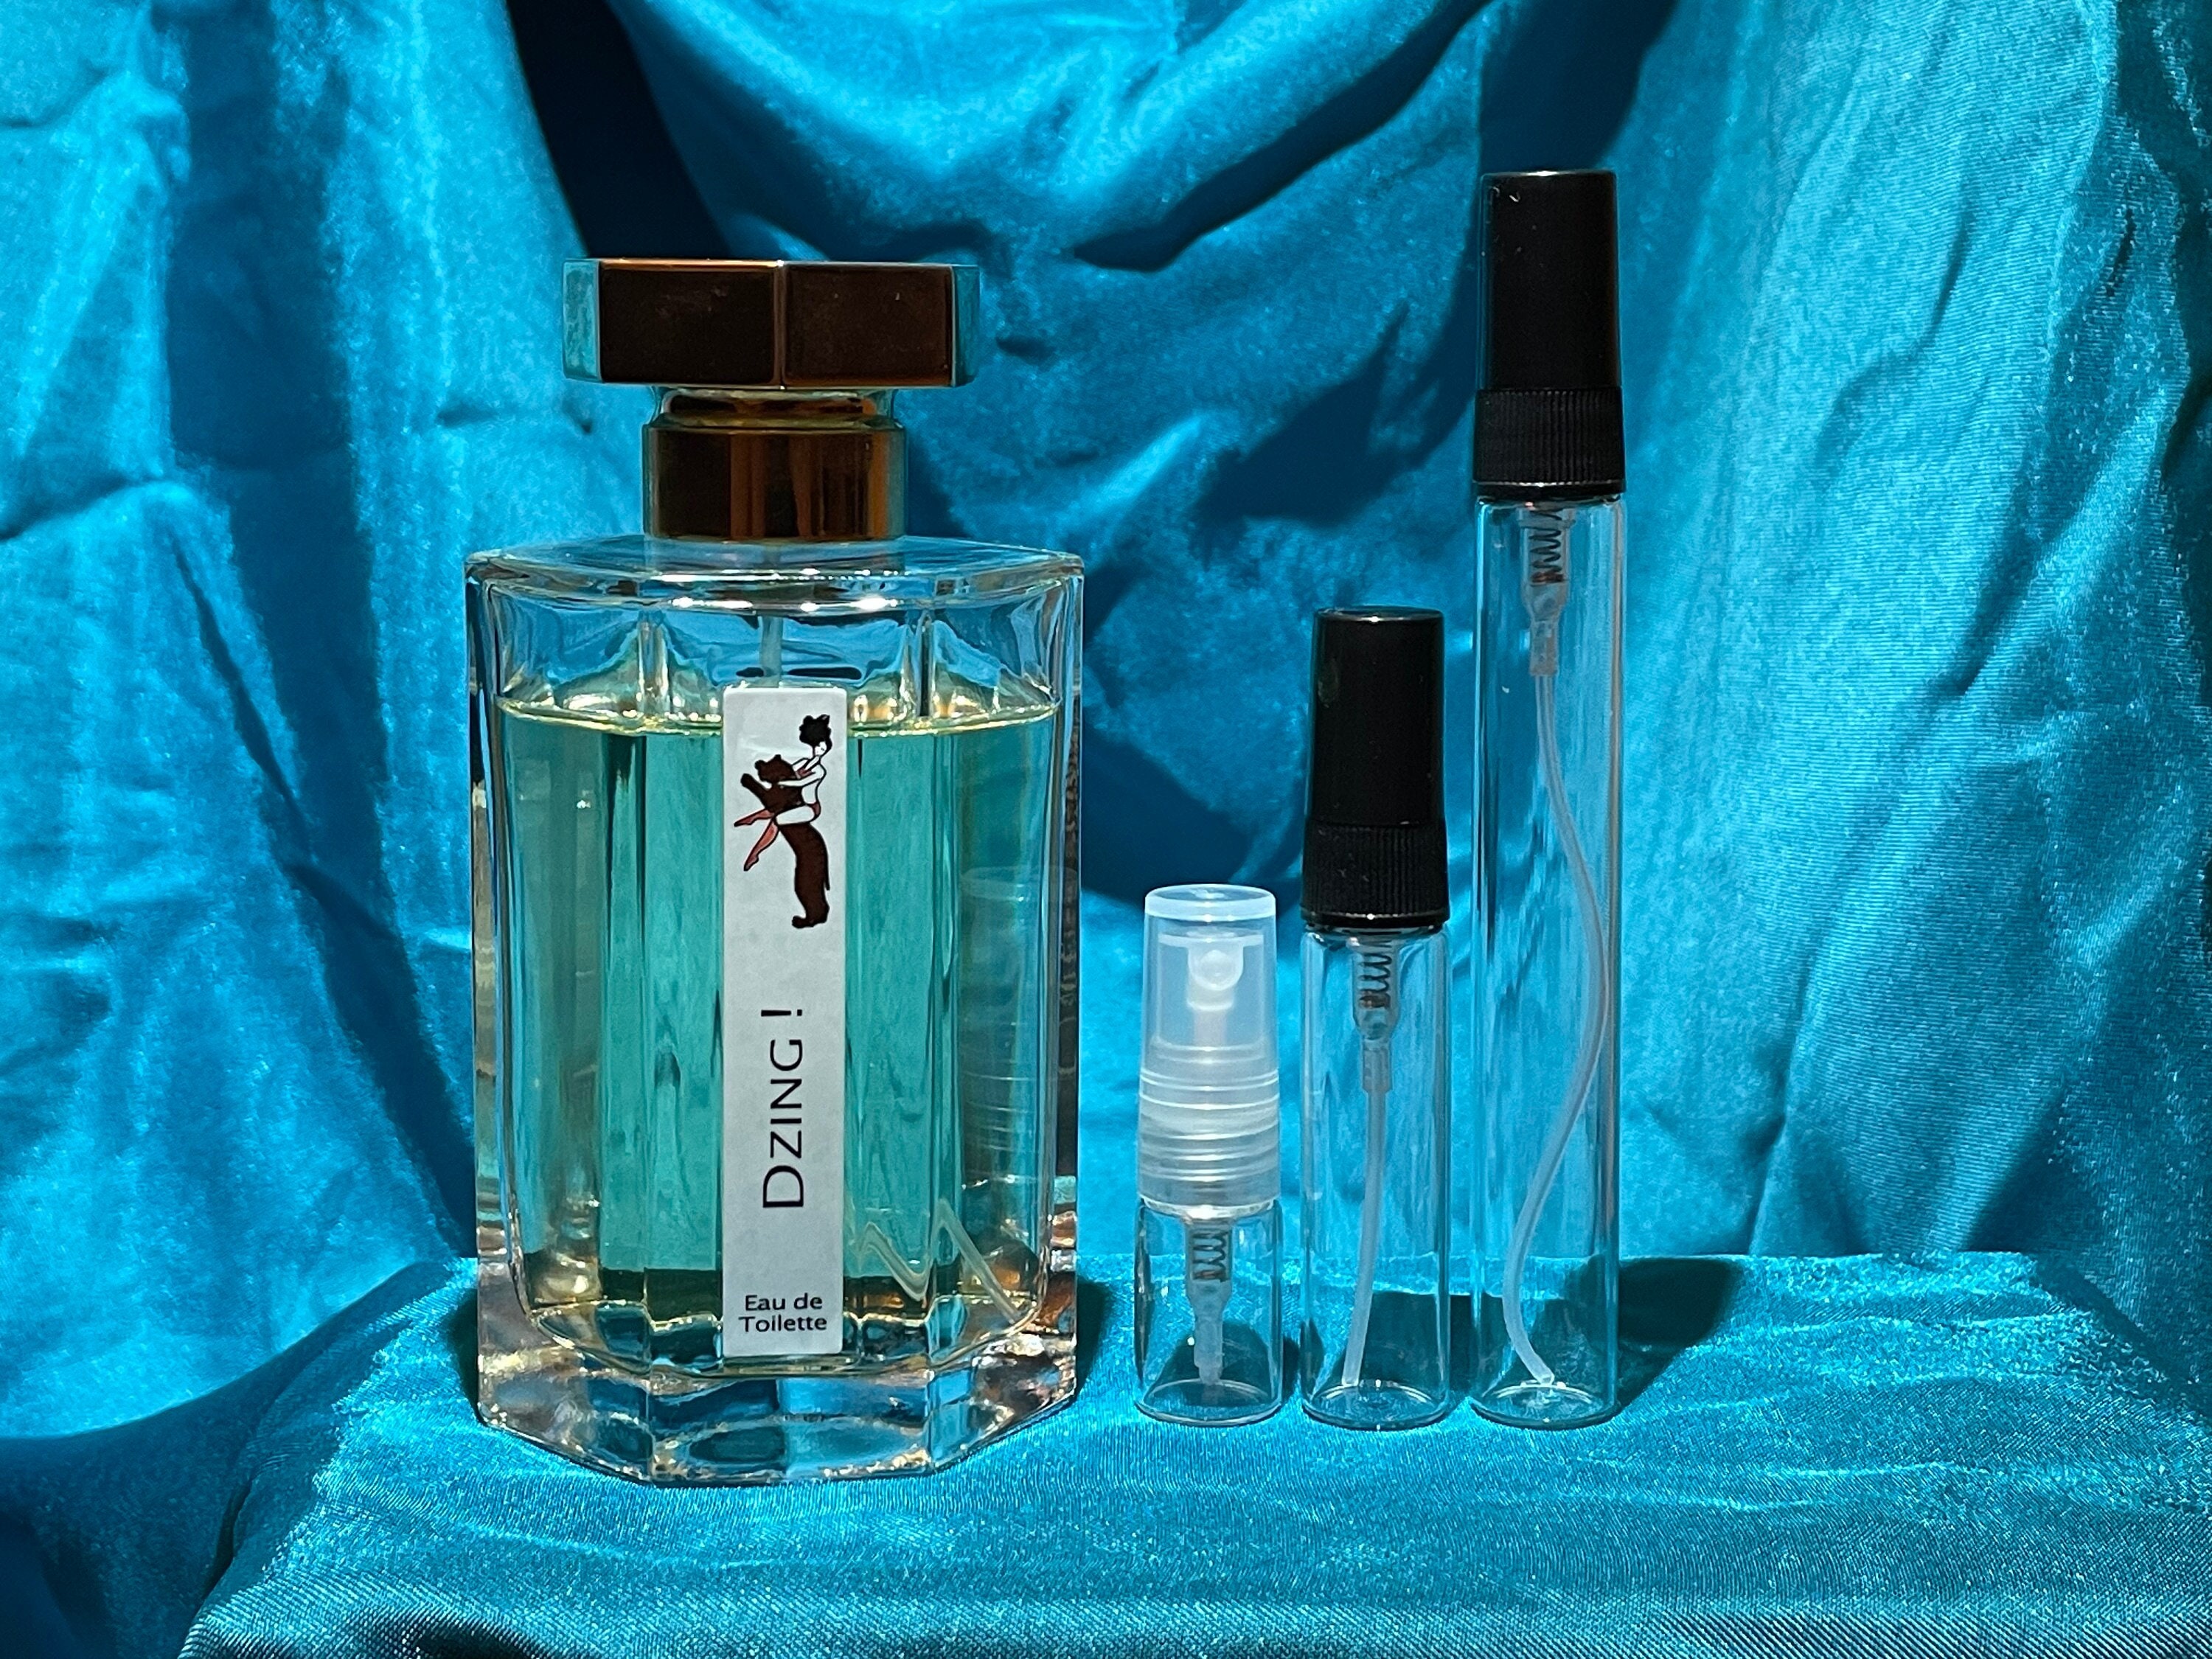 Alahine 30 ml - Teo Cabanel  RAFINAD Niche Perfumes E-Shop